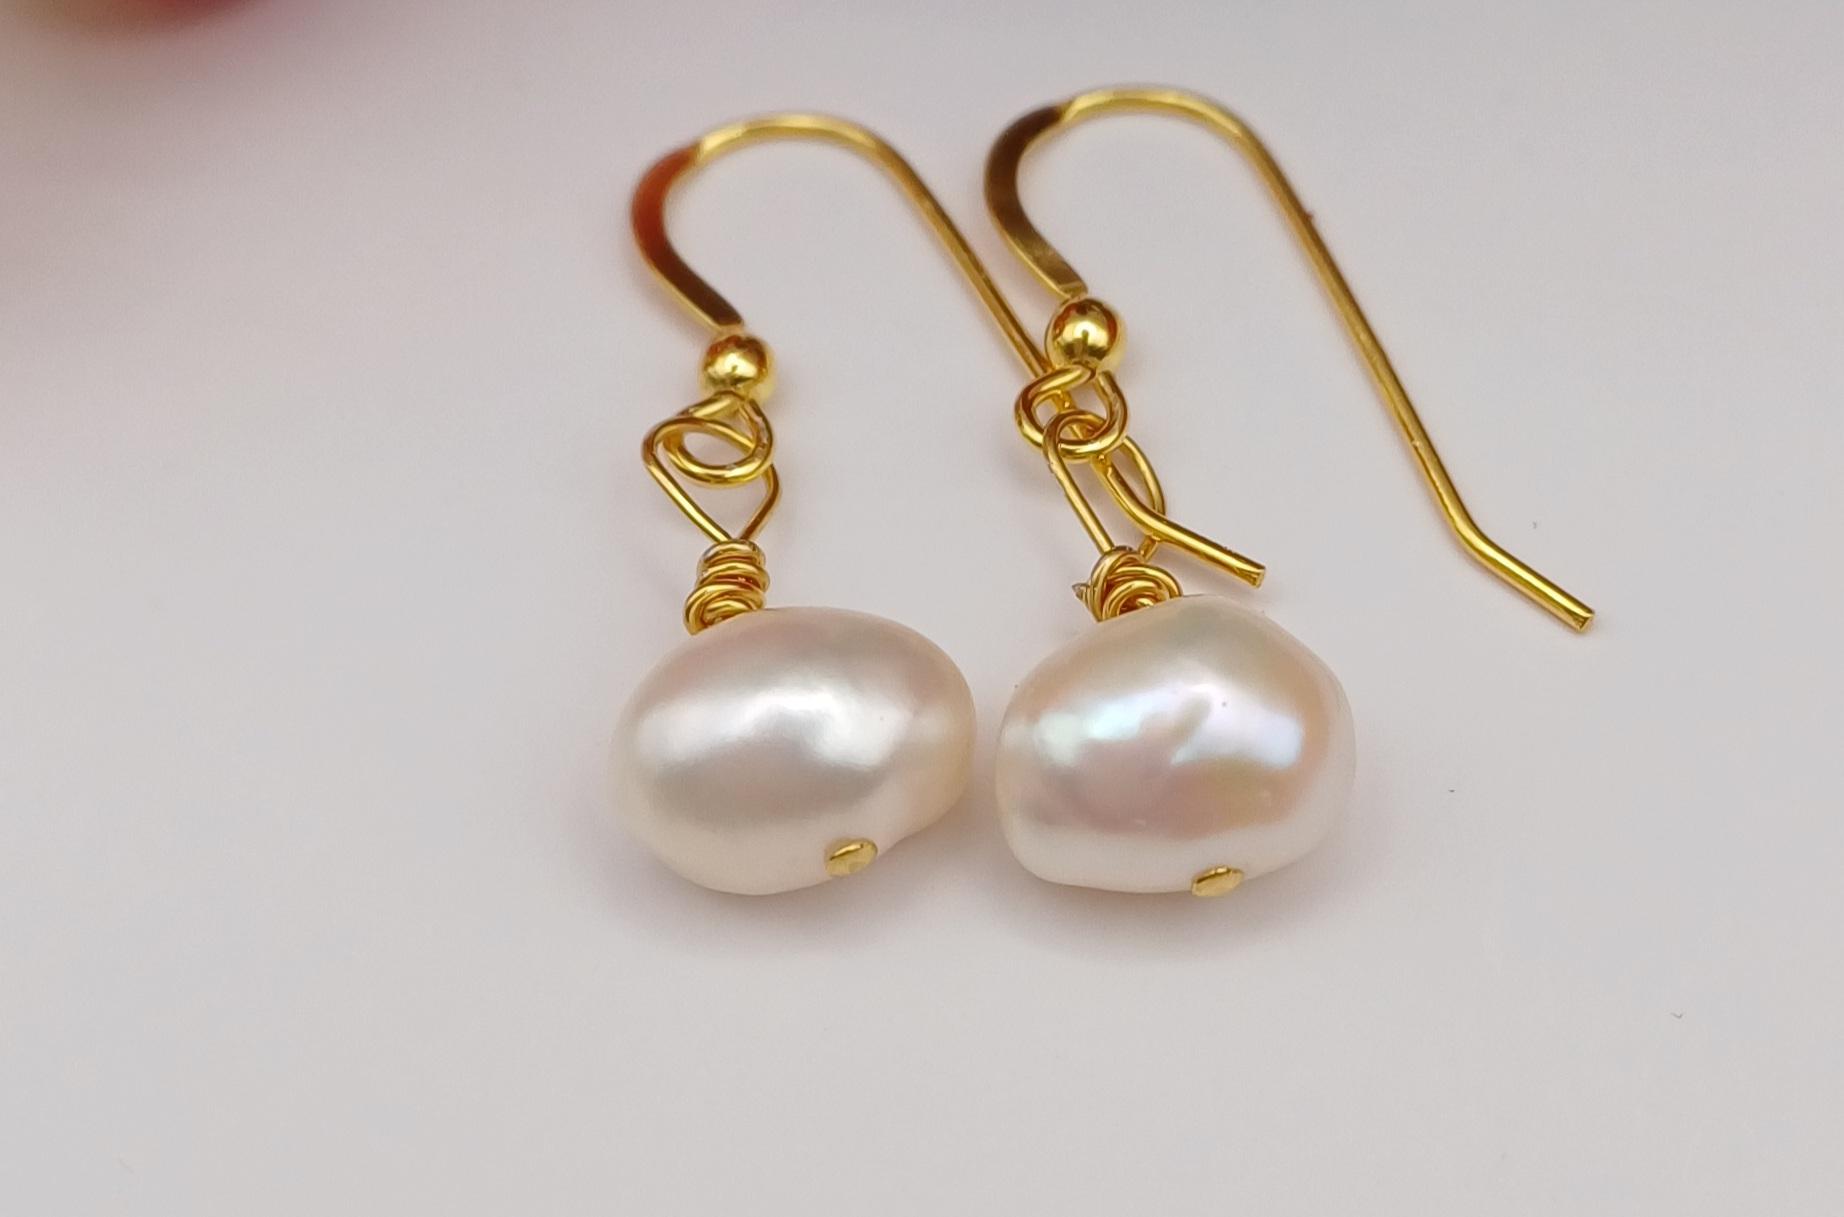 EARRINGS - 14k Gold Vermeil Pearl Earrings